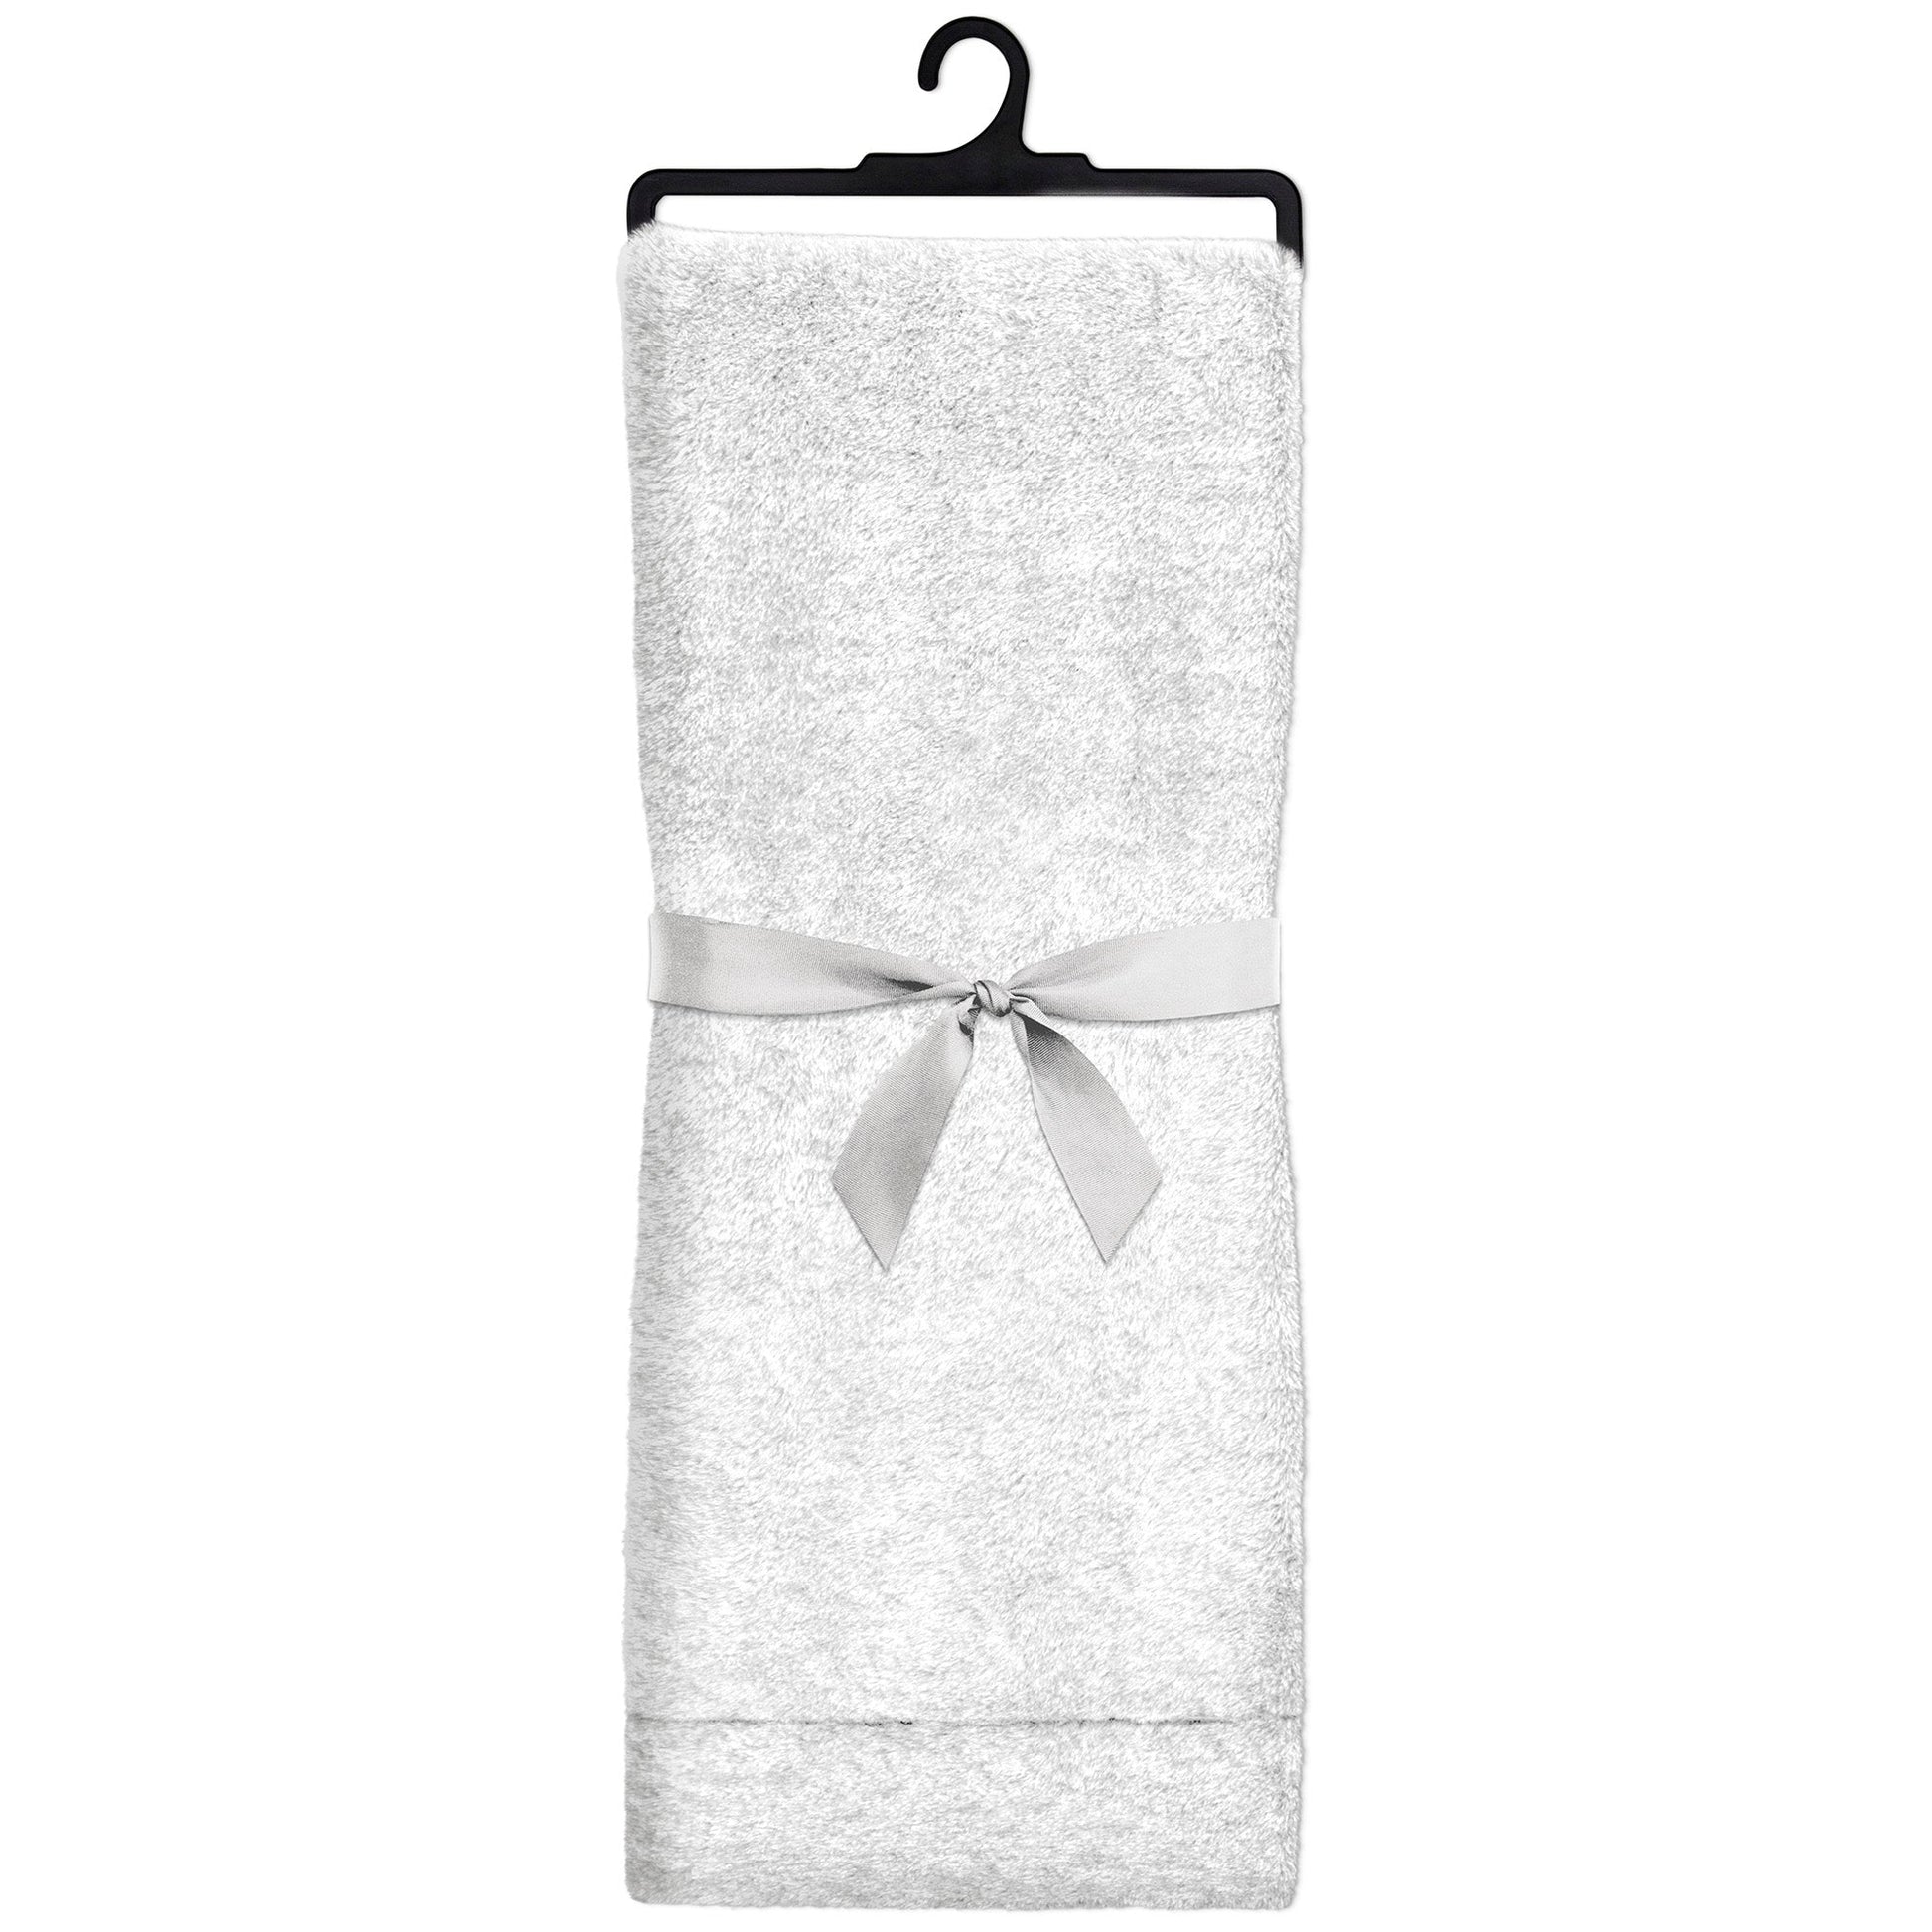 Super Soft Faux Fur Blanket Throw Sherpa Home Decor Bedding 48X60 Light Grey - DecoElegance - Blanket Throw Home Bedding